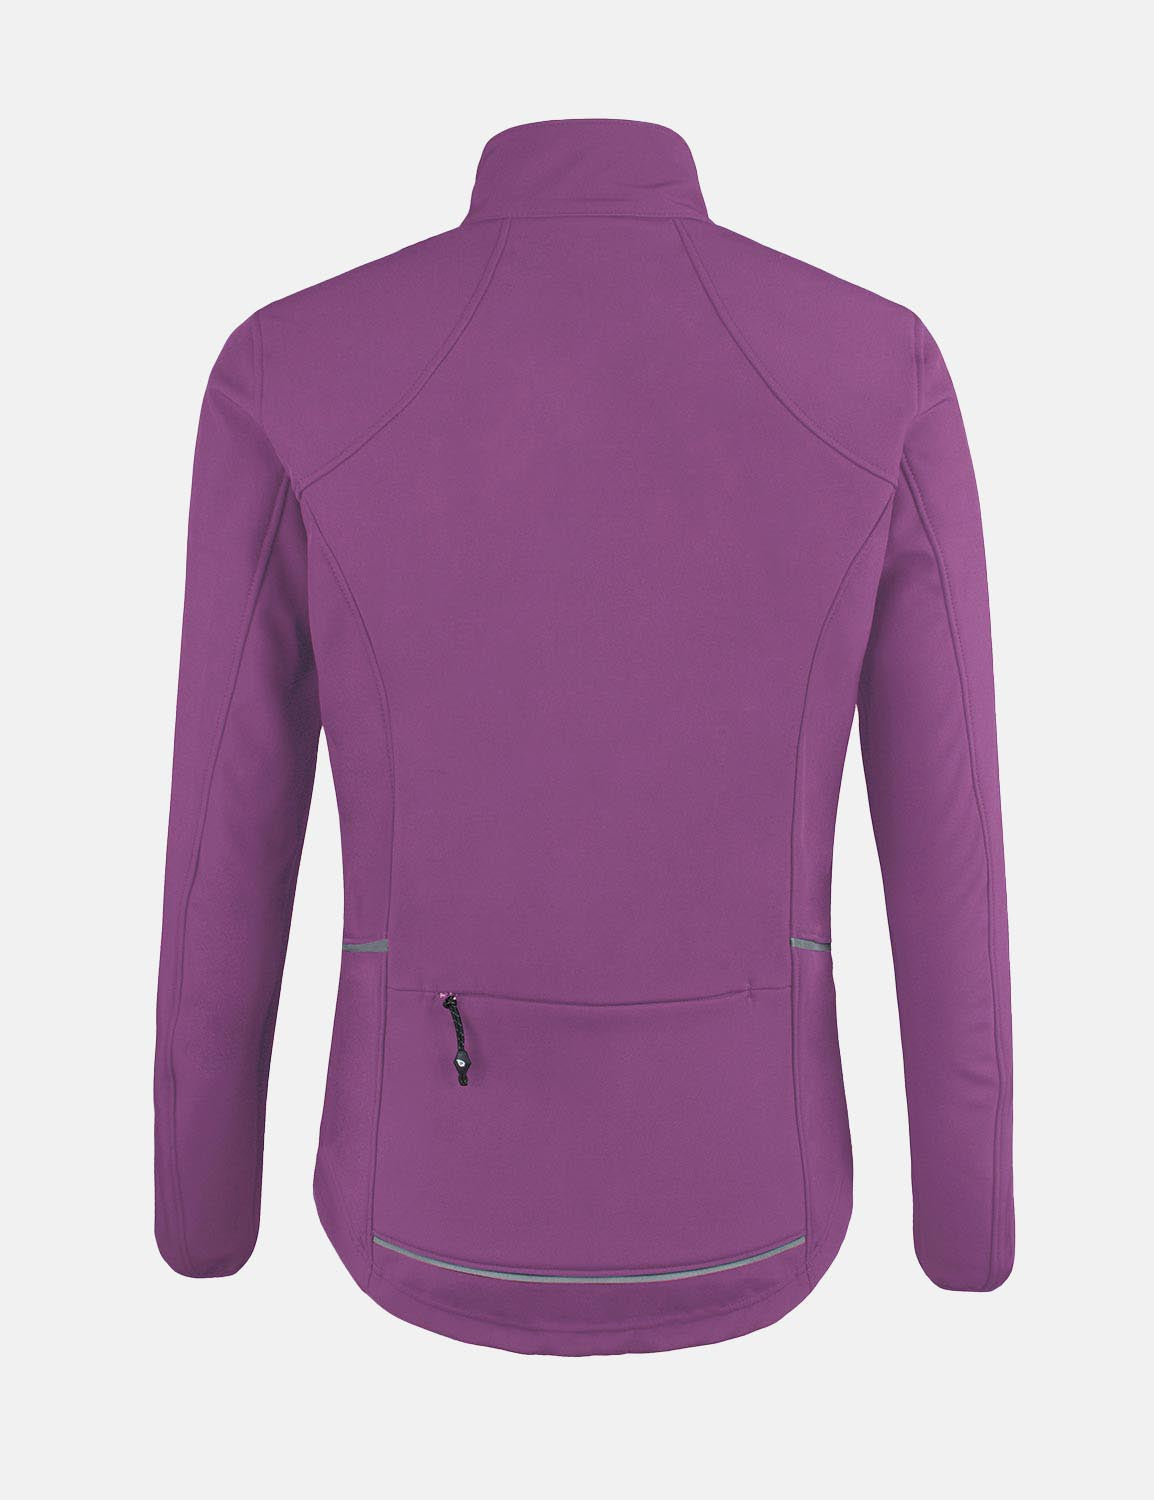 Baleaf Women's Stand Up Collar Full Zip Thermal Jacket – Baleaf Sports